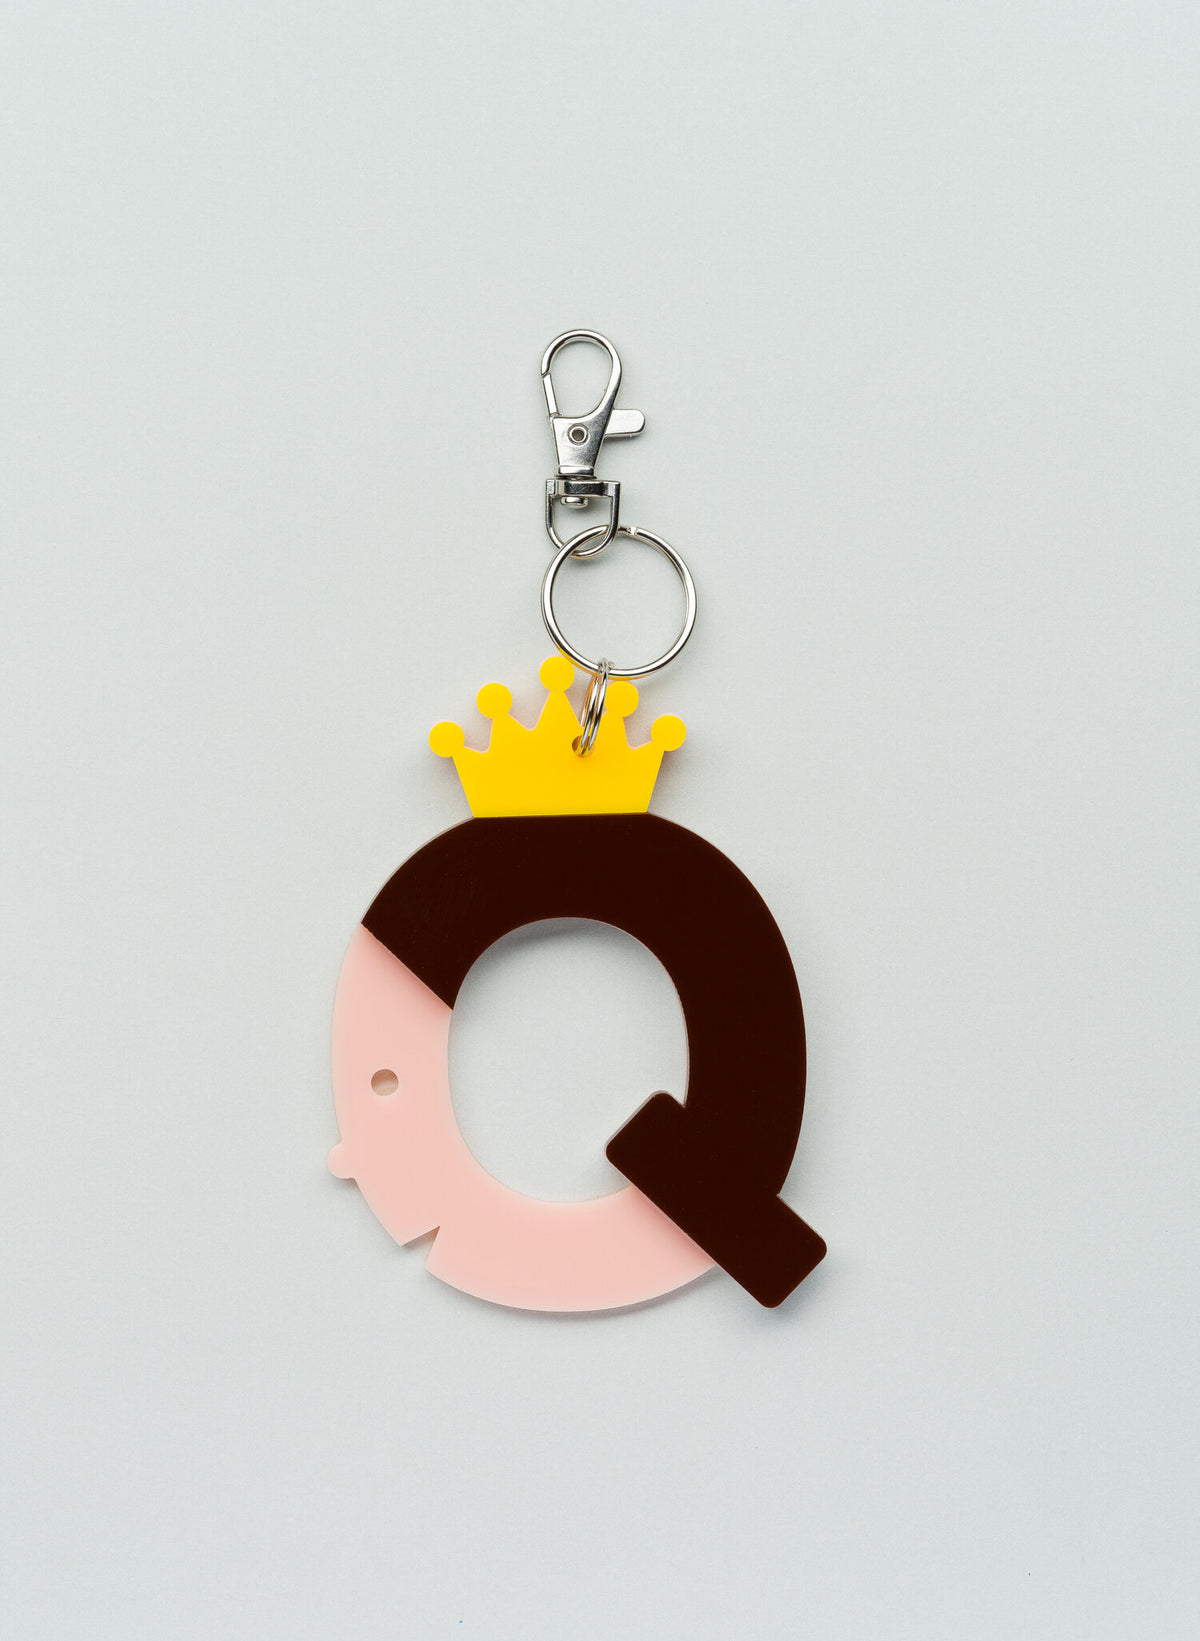 v.happy co bag tag - letter q for queen - freddie the rat kids boutique